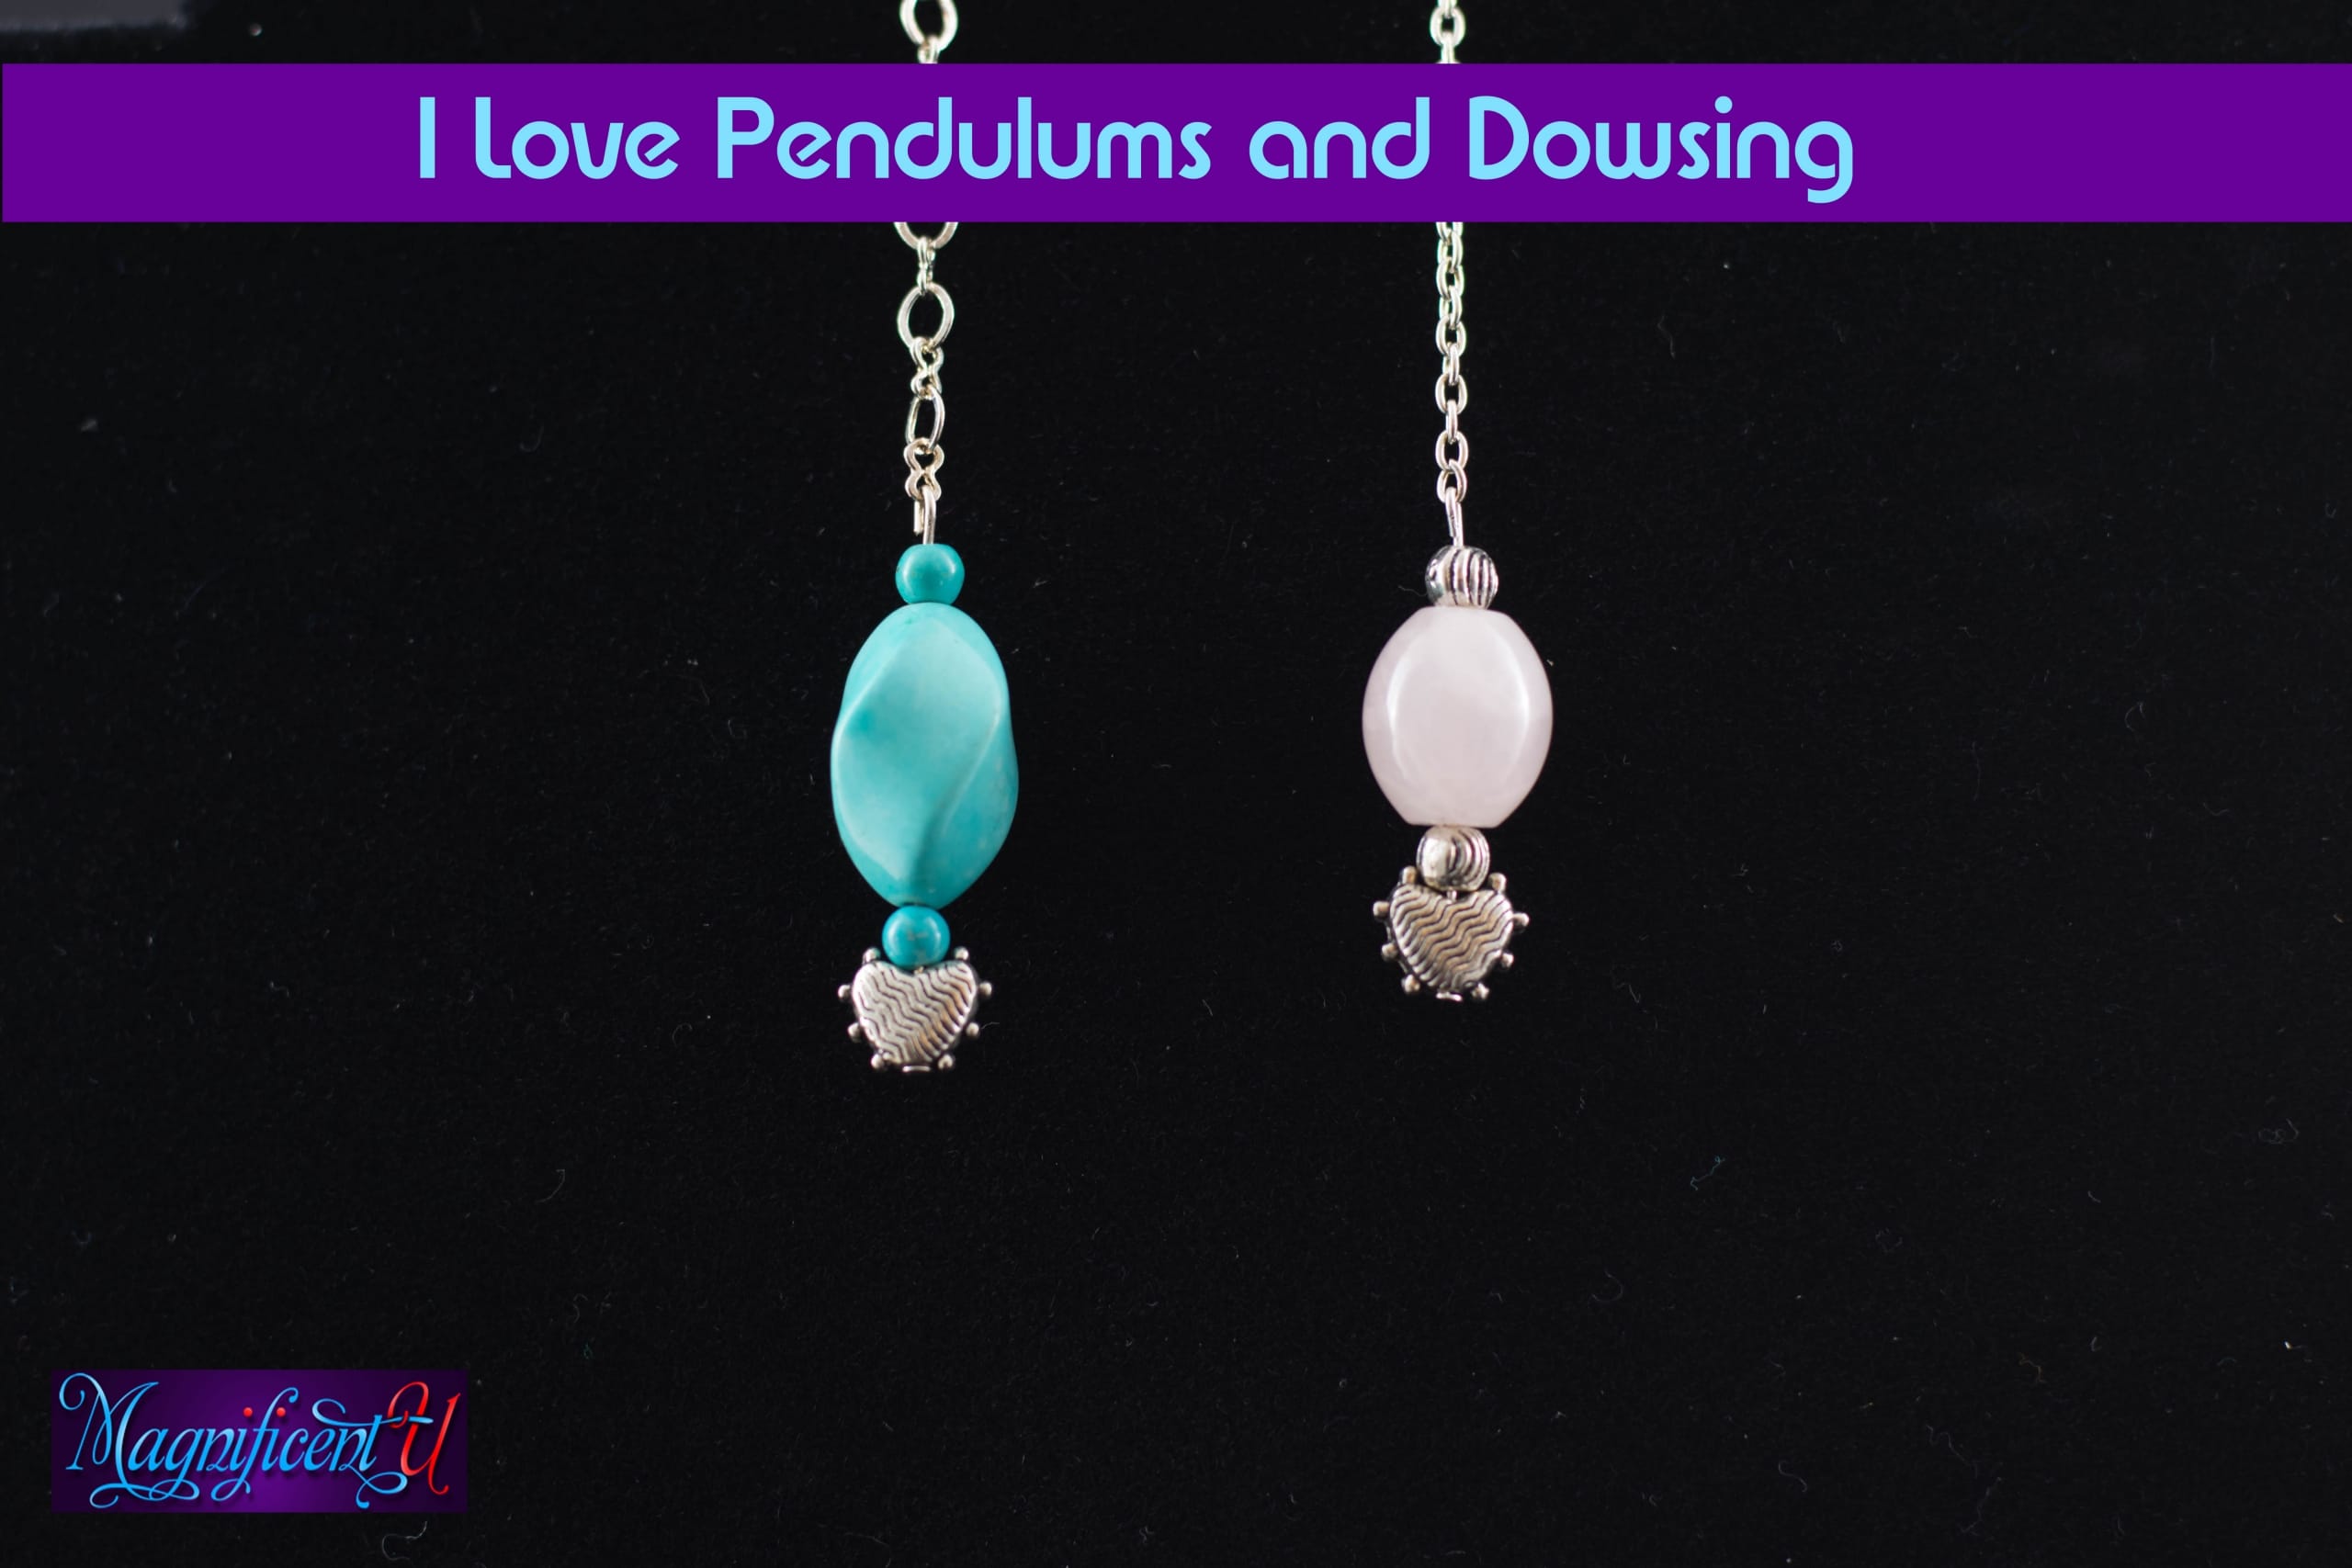 Pendulum Dowsing Articles at Magnificent U